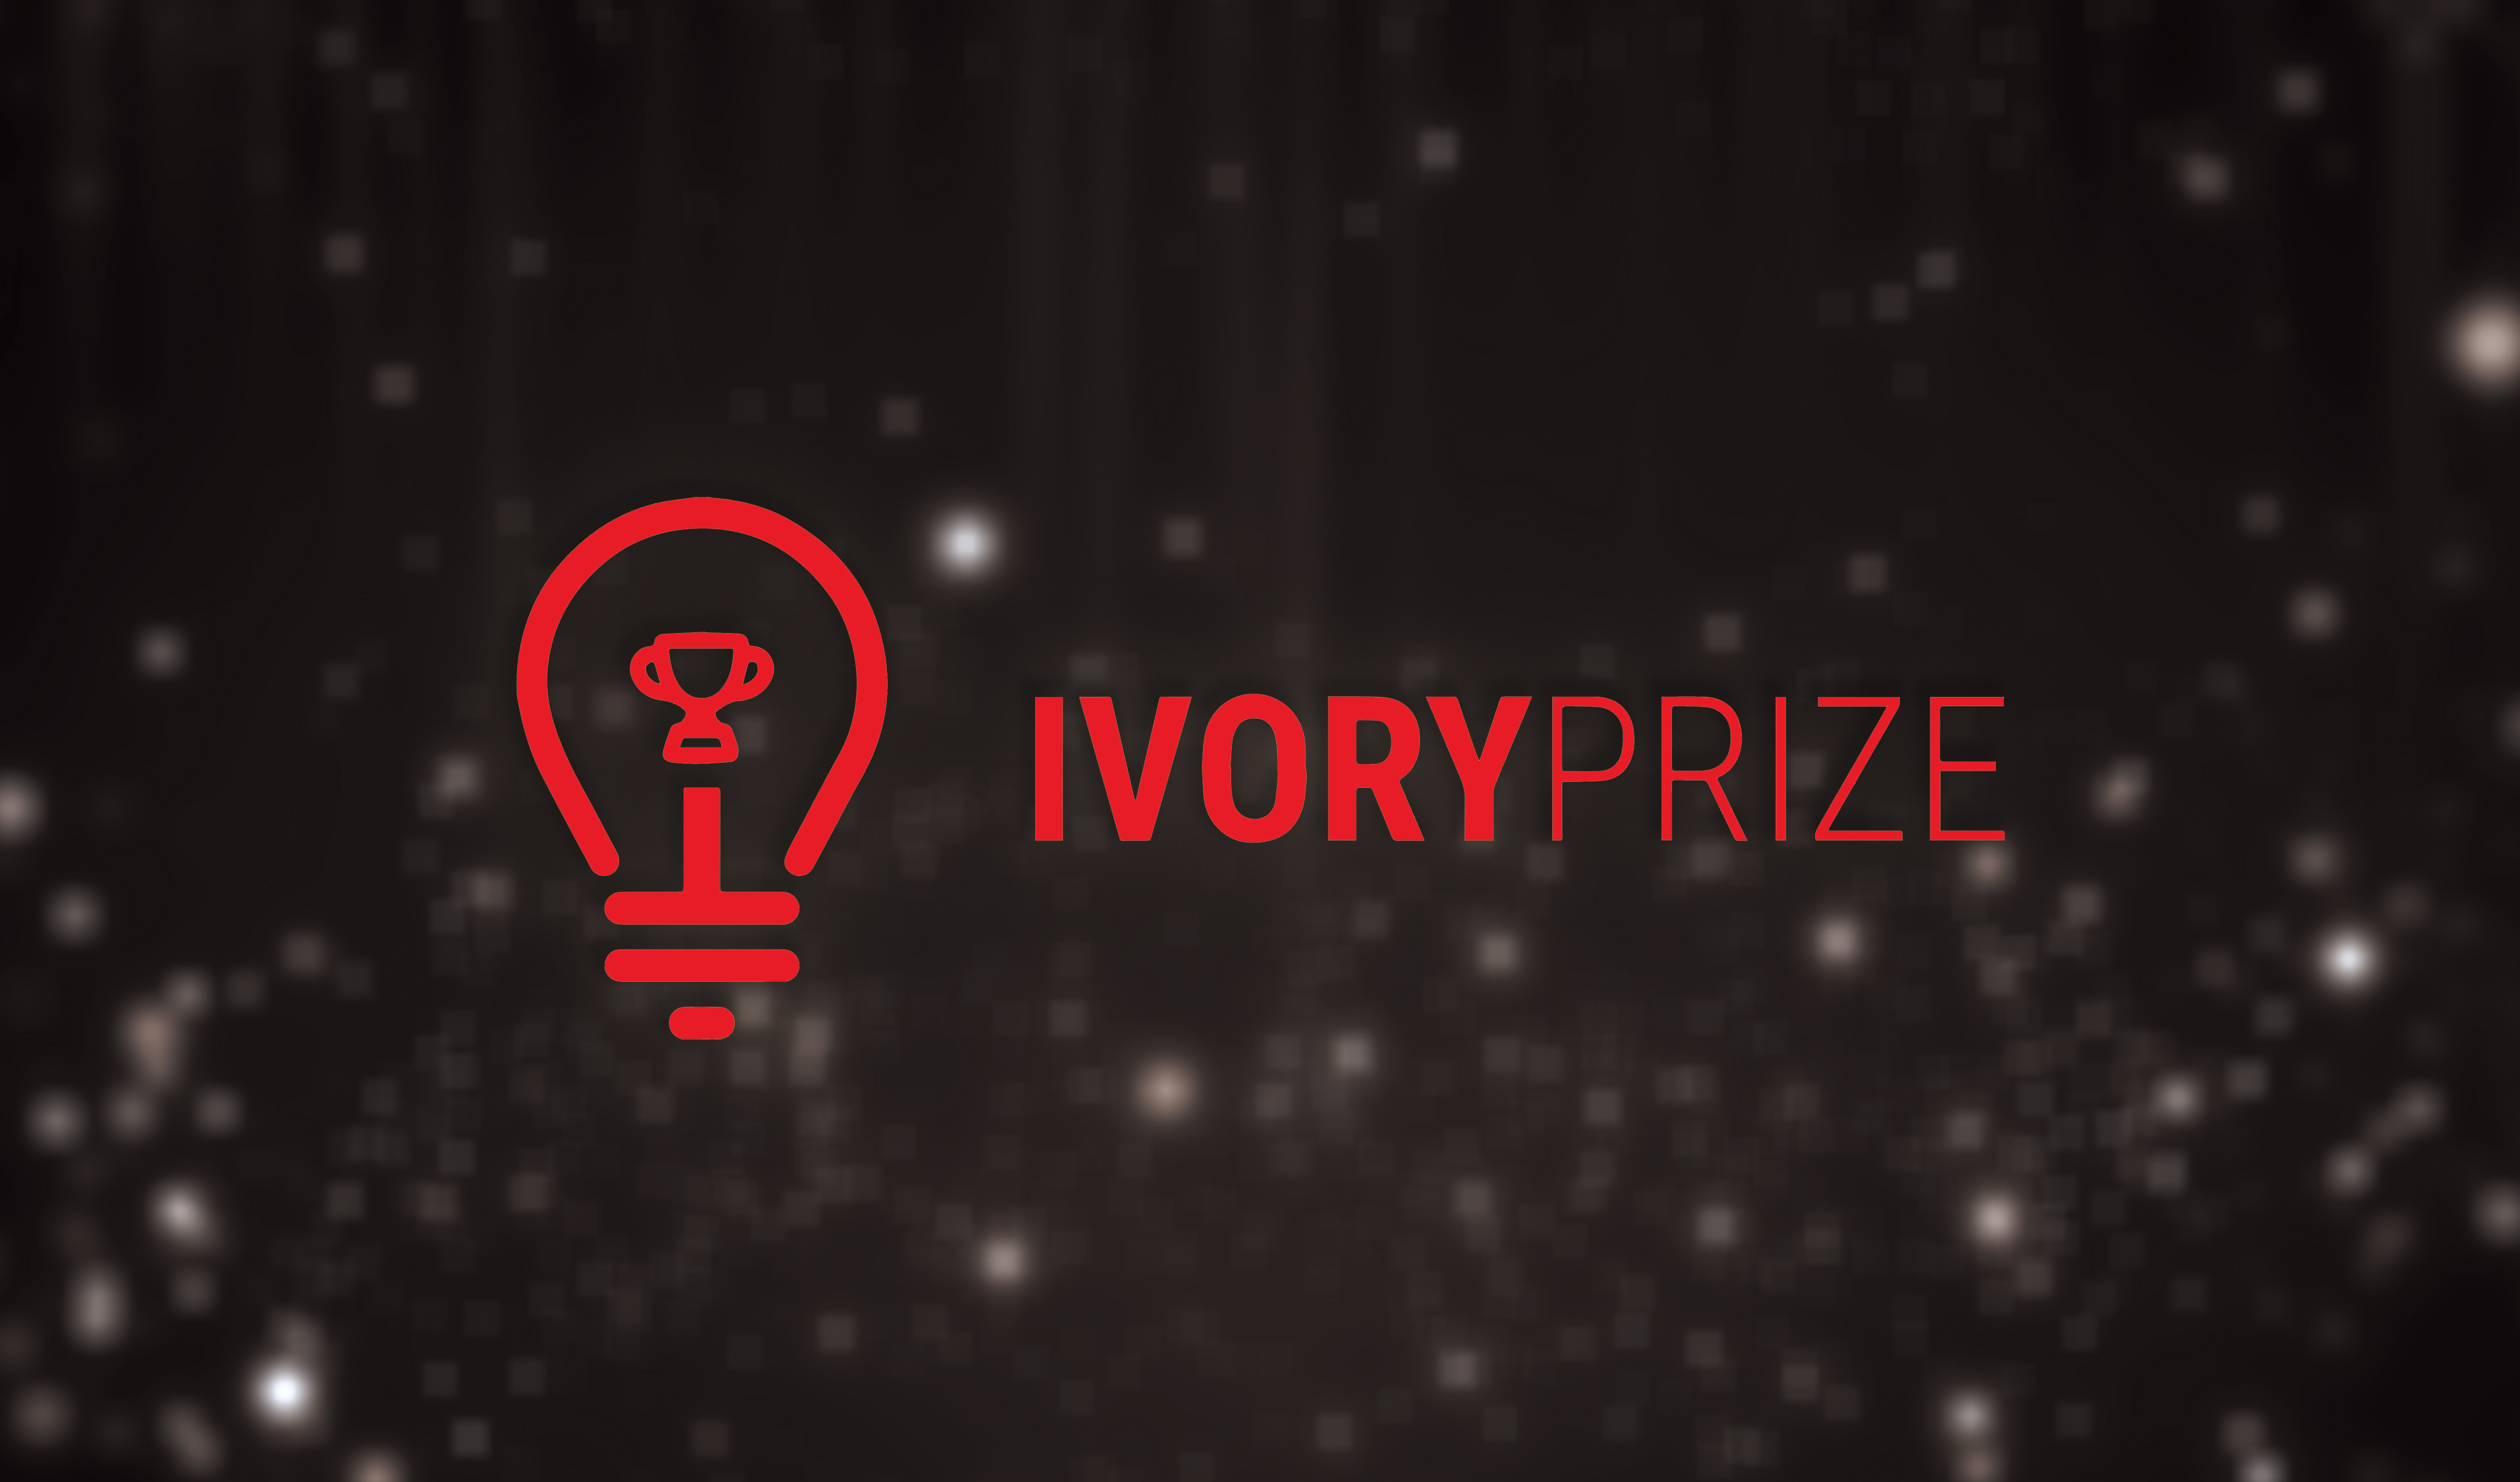 Ivory Prize awards logo with silver background